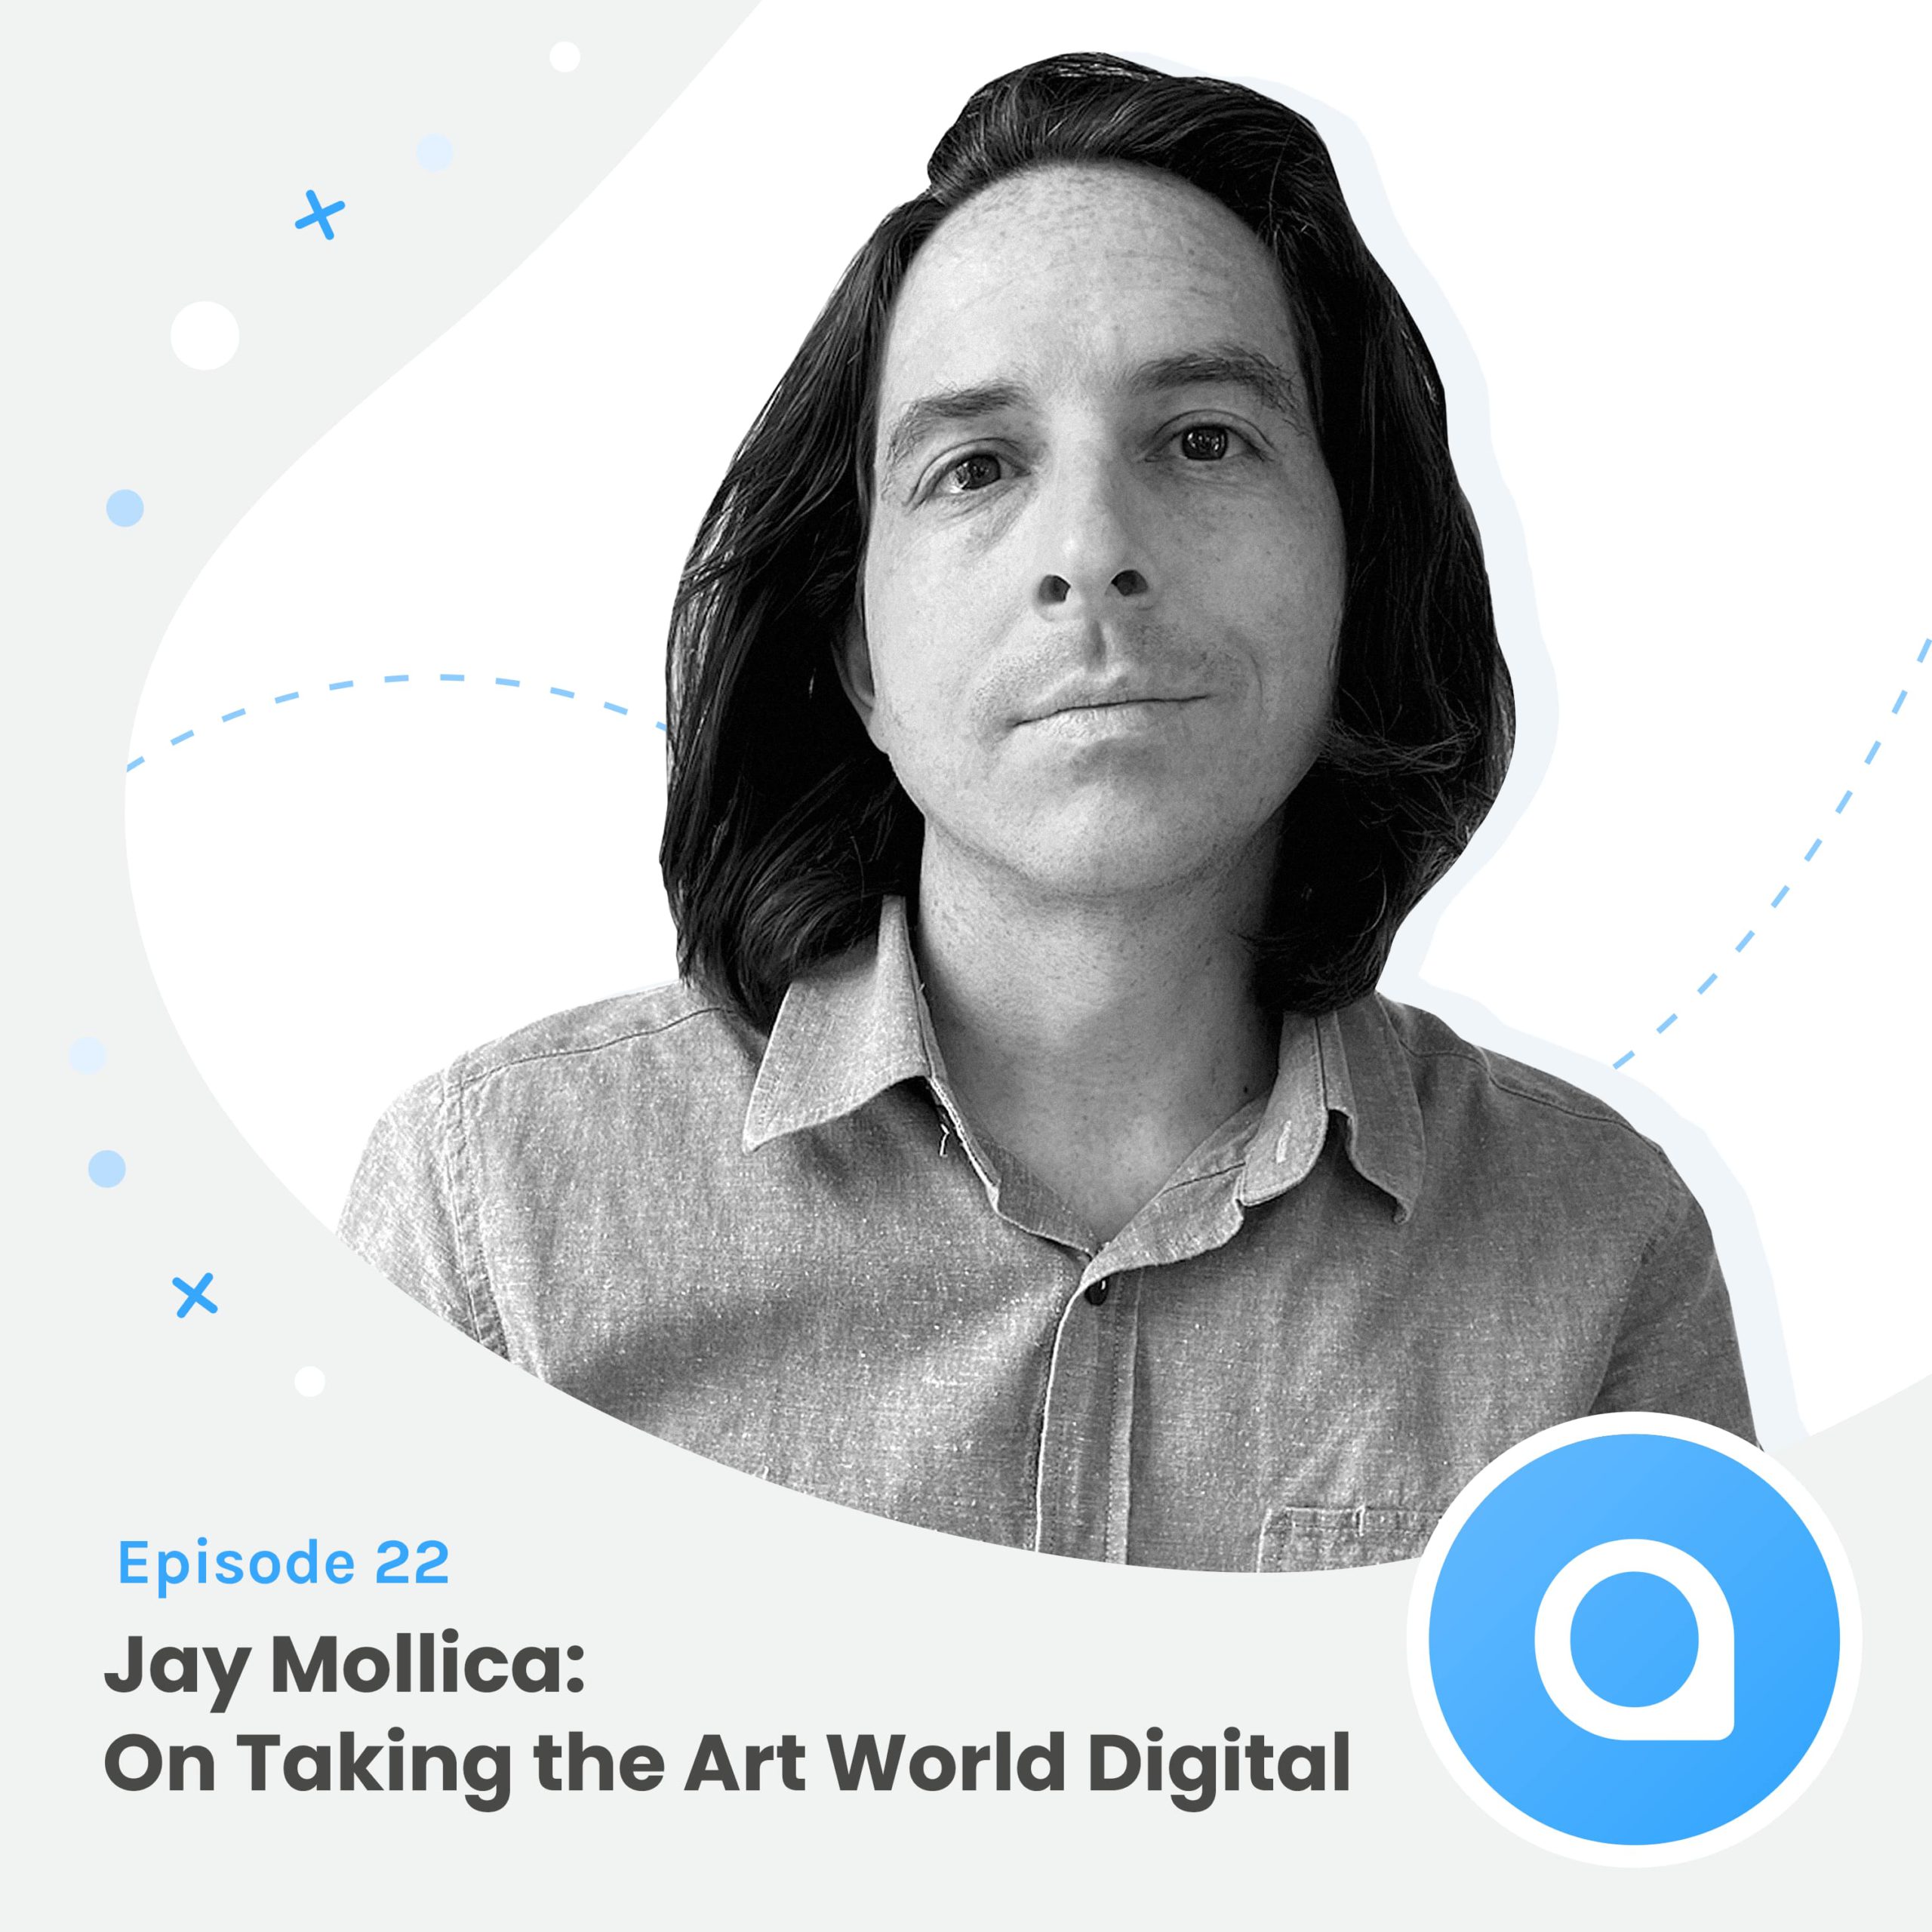 Jay Mollica: On Taking the Art World Digital